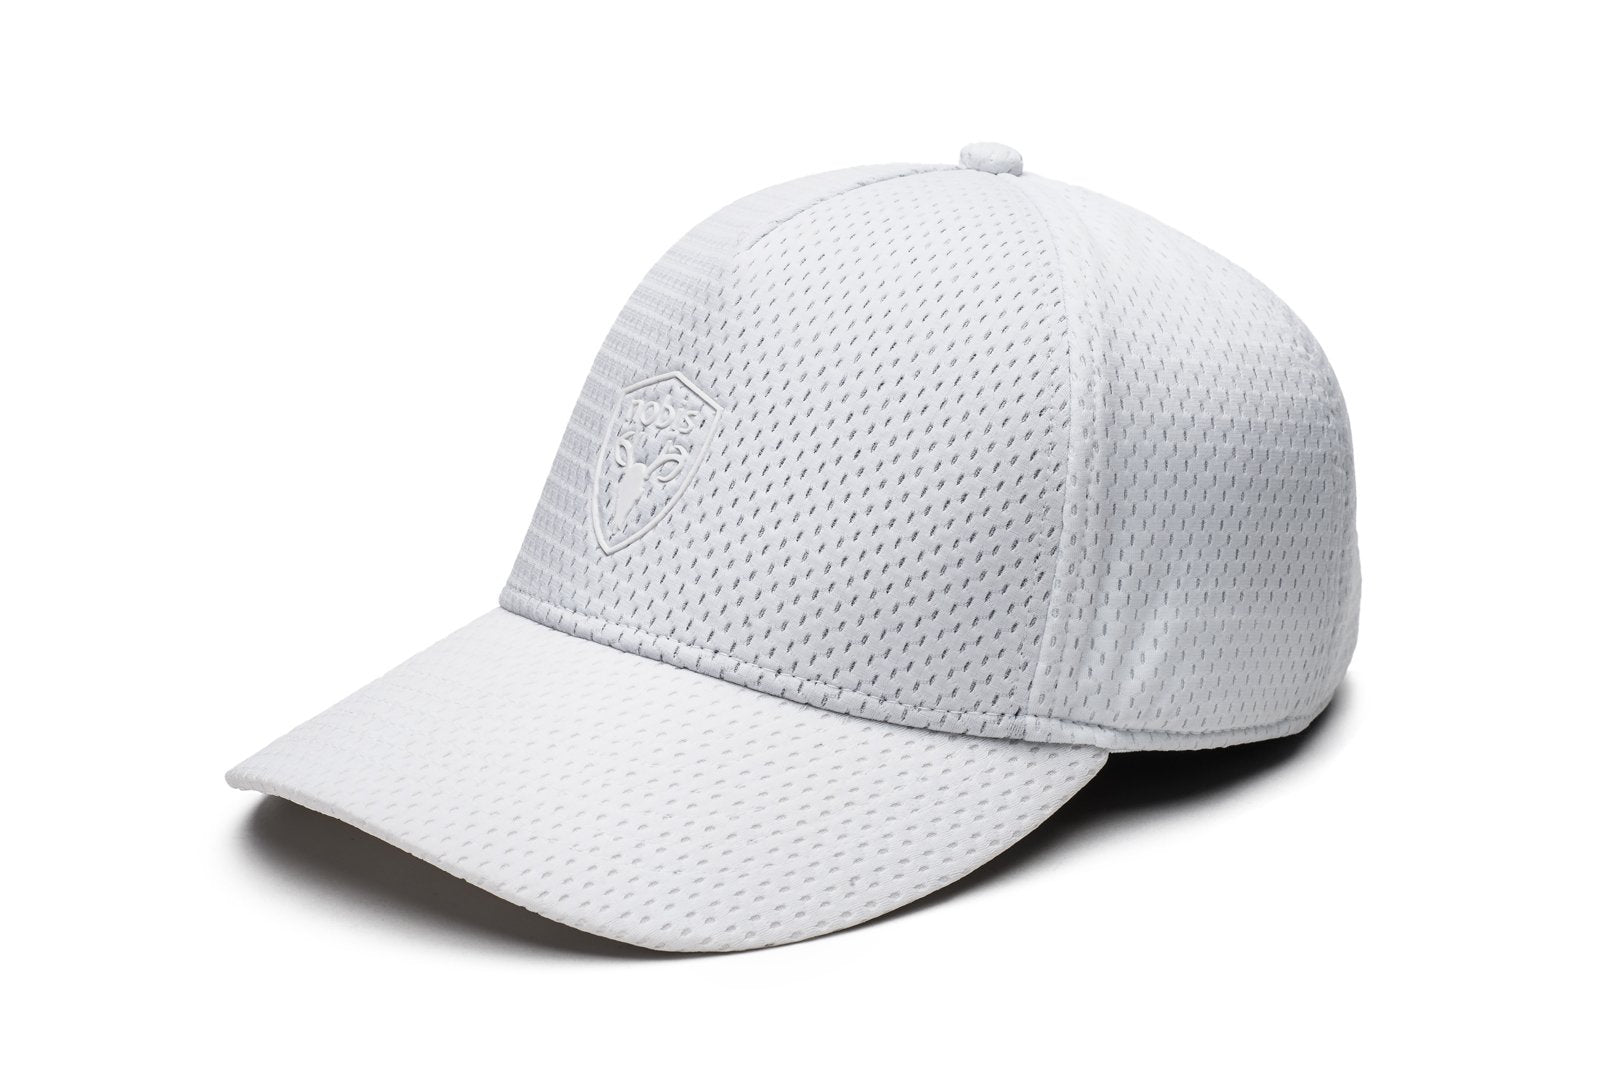 Real Madrid N15 white cap, adjustable